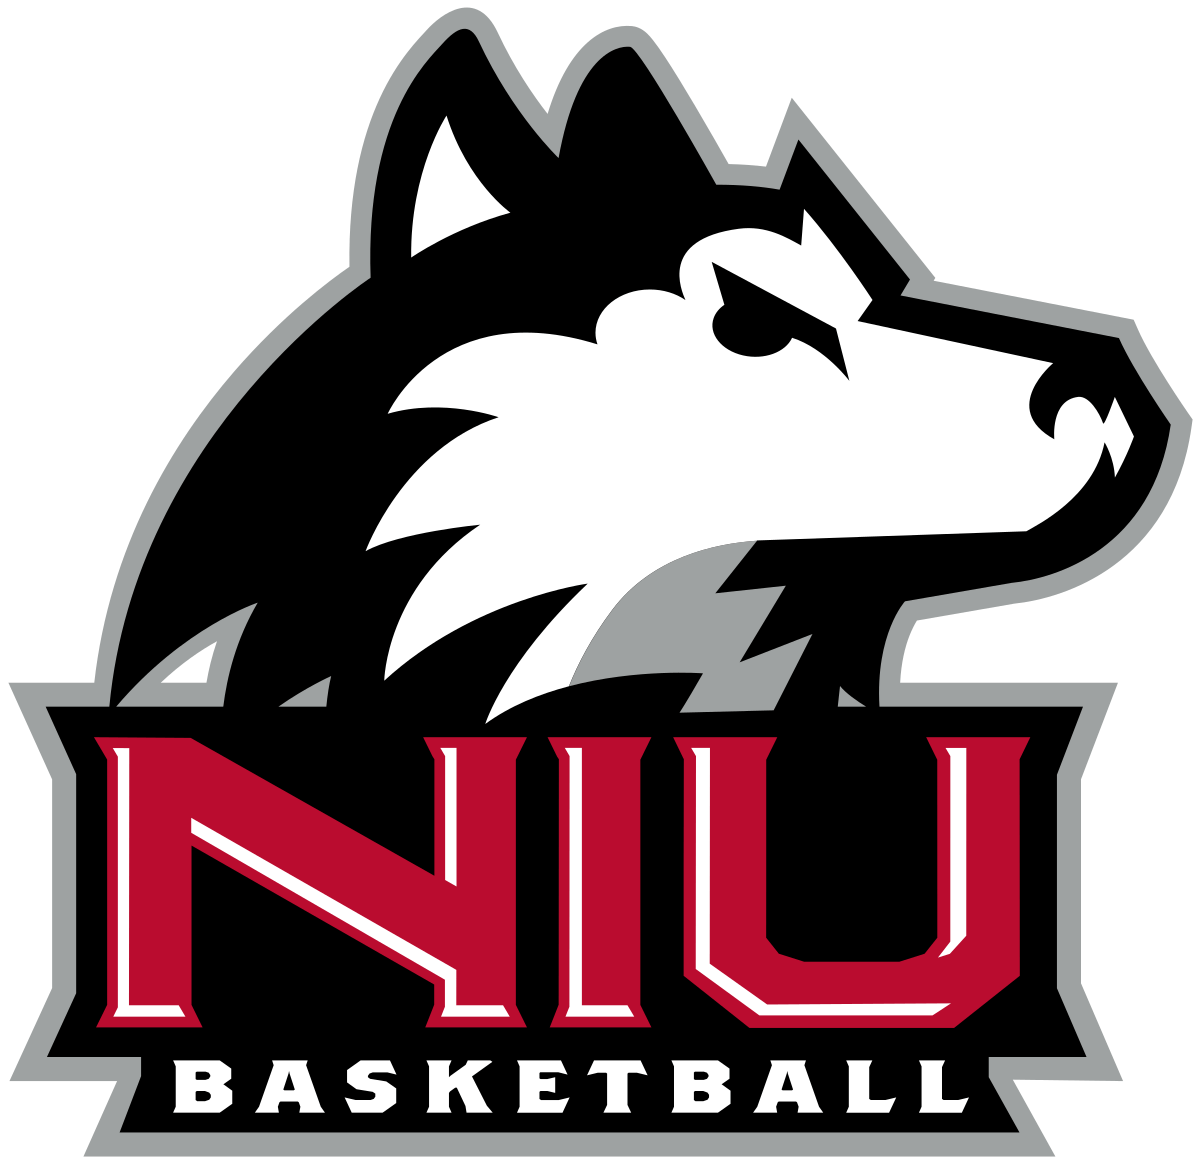 Red White and Black Basketball Logo - Northern Illinois Huskies men's basketball